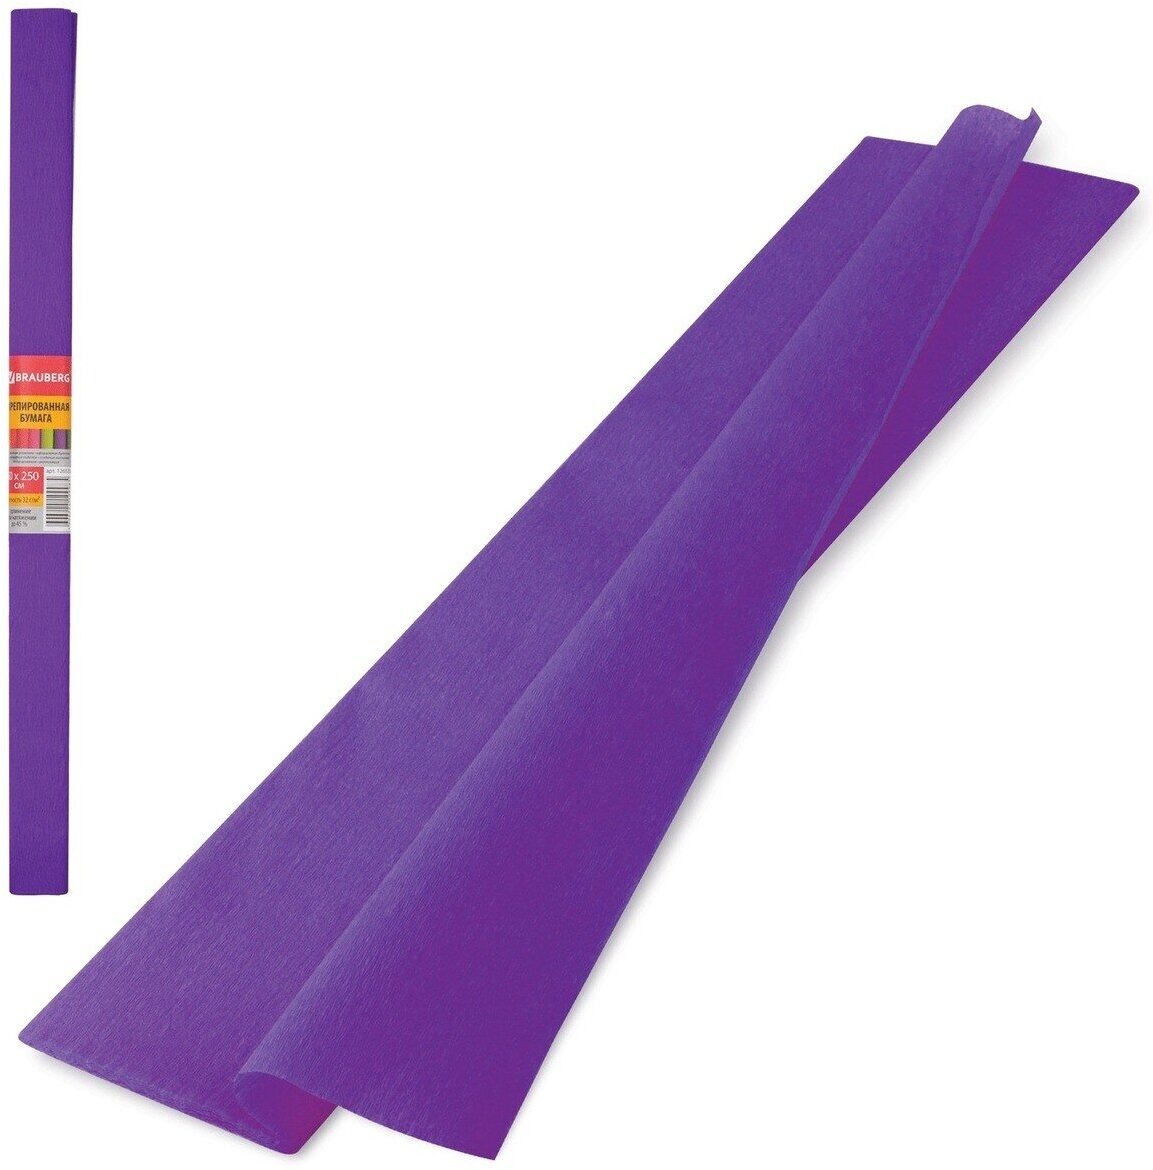 Цветная бумага Brauberg крепированная плотная, растяжение до 45%, 32 г/м, рулон, фиолетовая, 50х250 см (126533)